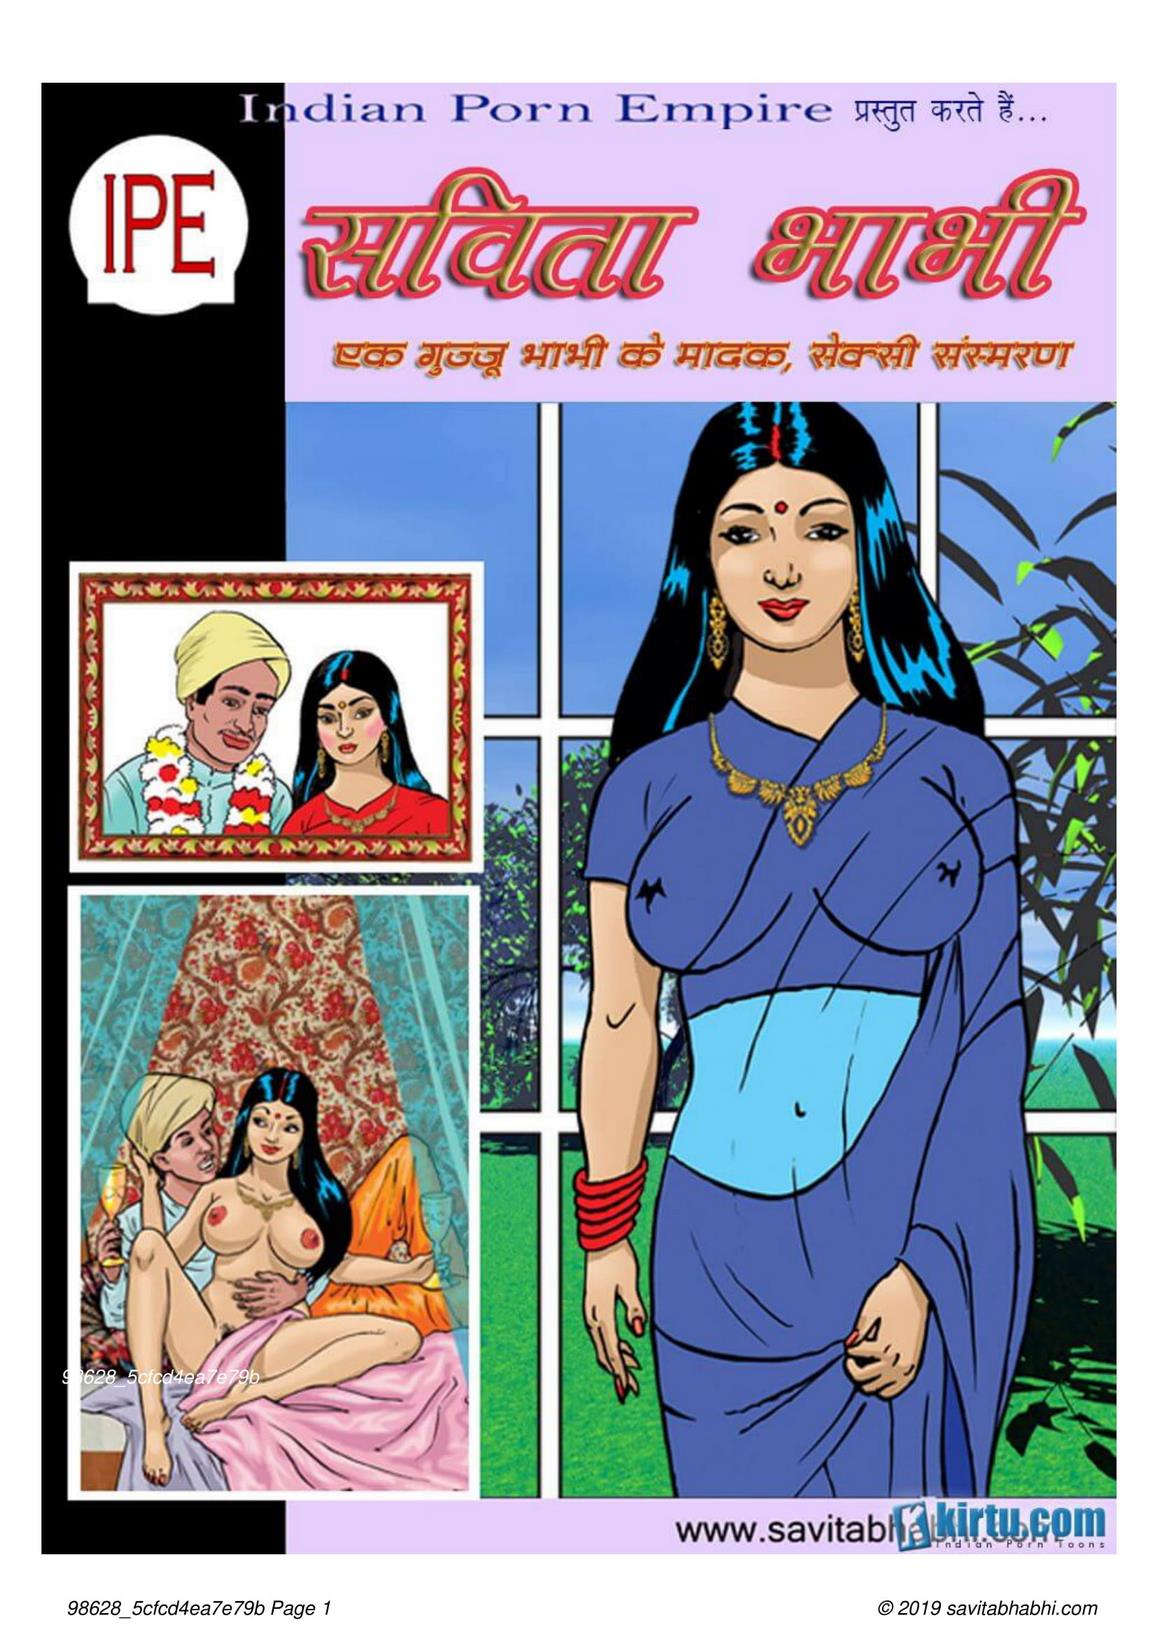 Savita Bhabhi Episode 01 Hindi - Bra Bechne Aaya (ब्रा बेचने आया) - 35 - FSIComics